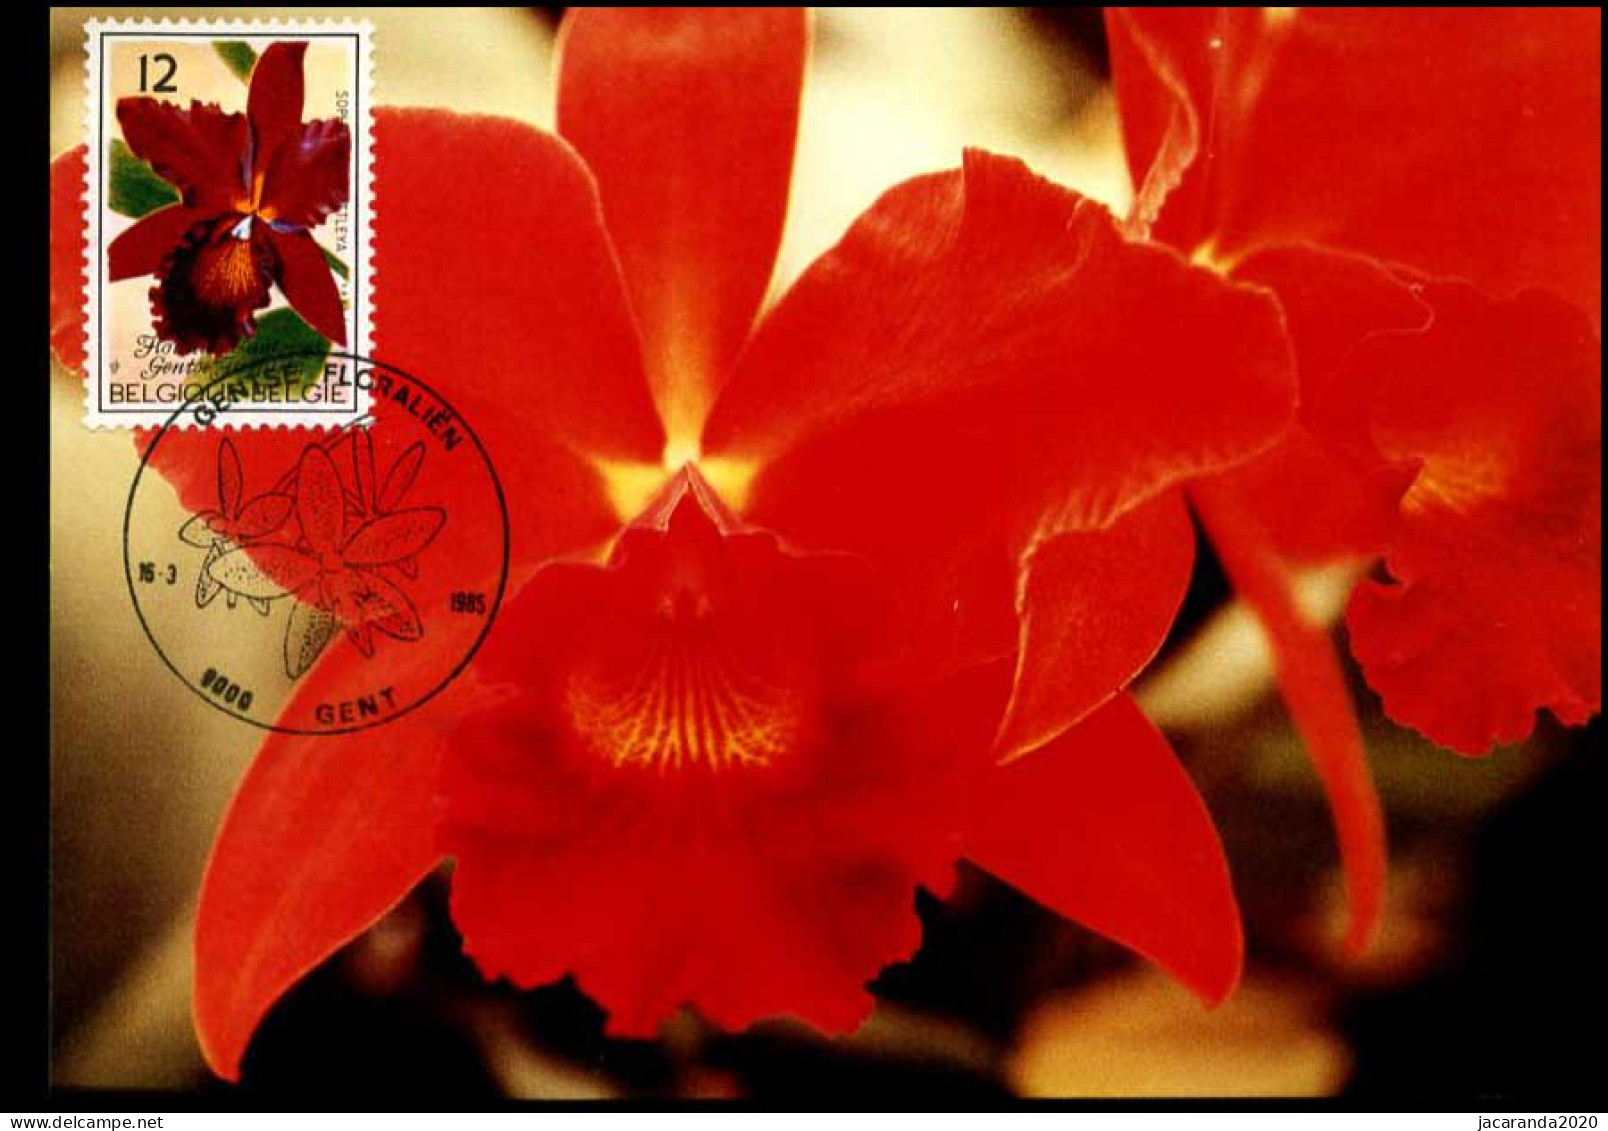 2165 - MK - Gentse Floraliën VII, Orchideeën #2 - 2001-2010